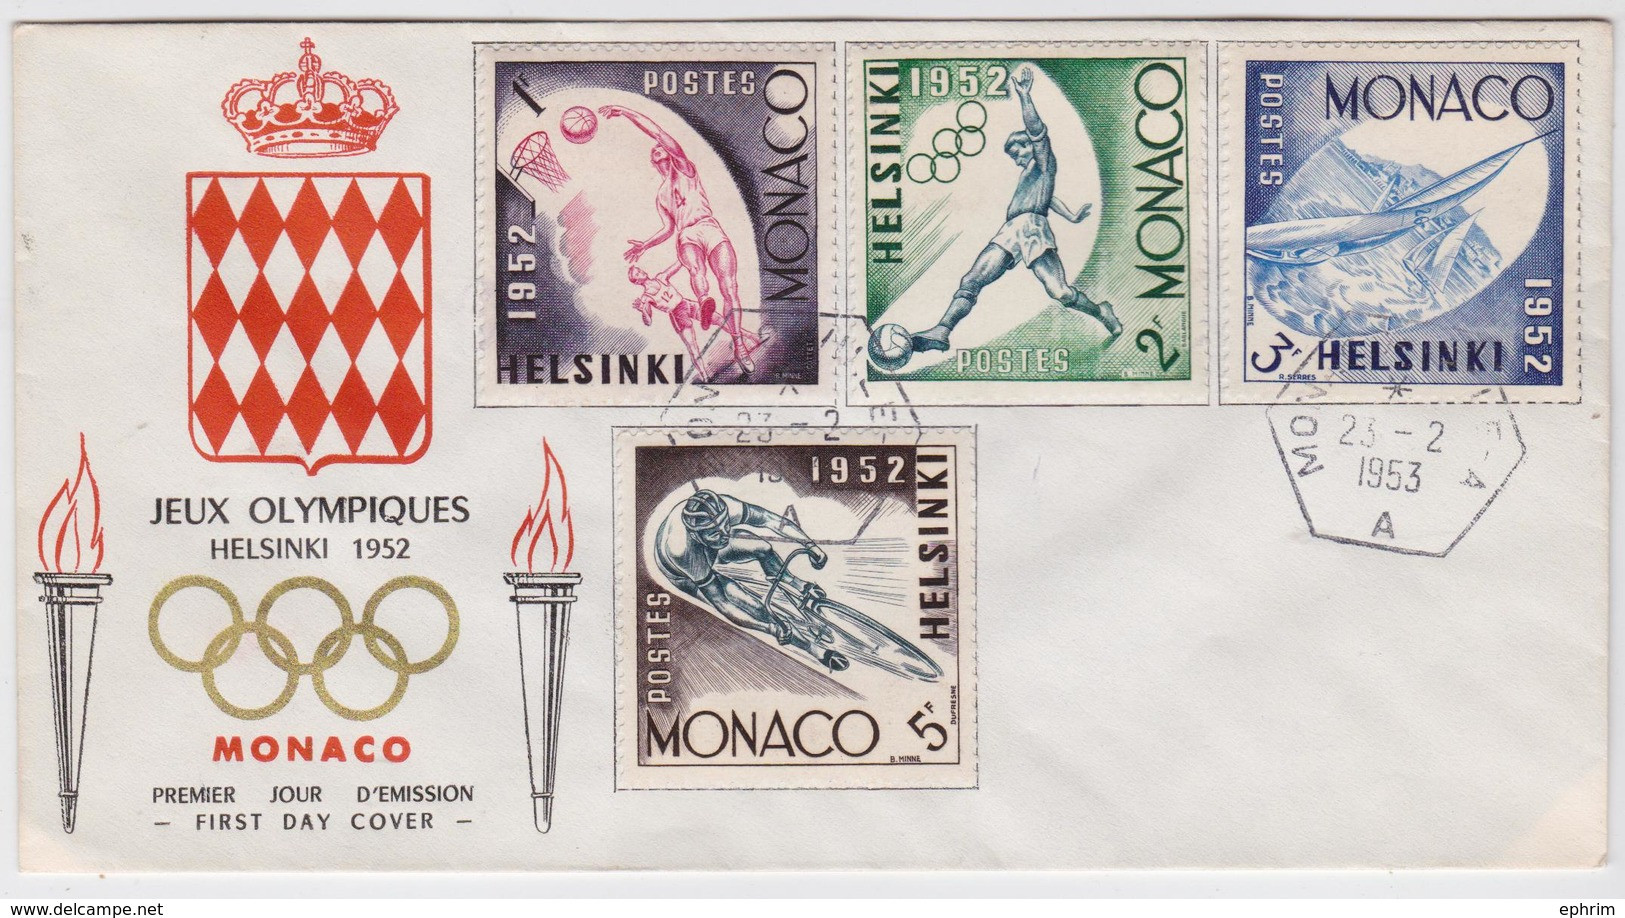 Jeux Olympiques Helsinki 1952 - FDC Enveloppe Premier Jour Monaco - Timbre Cyclisme - Basket-Ball Stamp Football Voile - Estate 1952: Helsinki